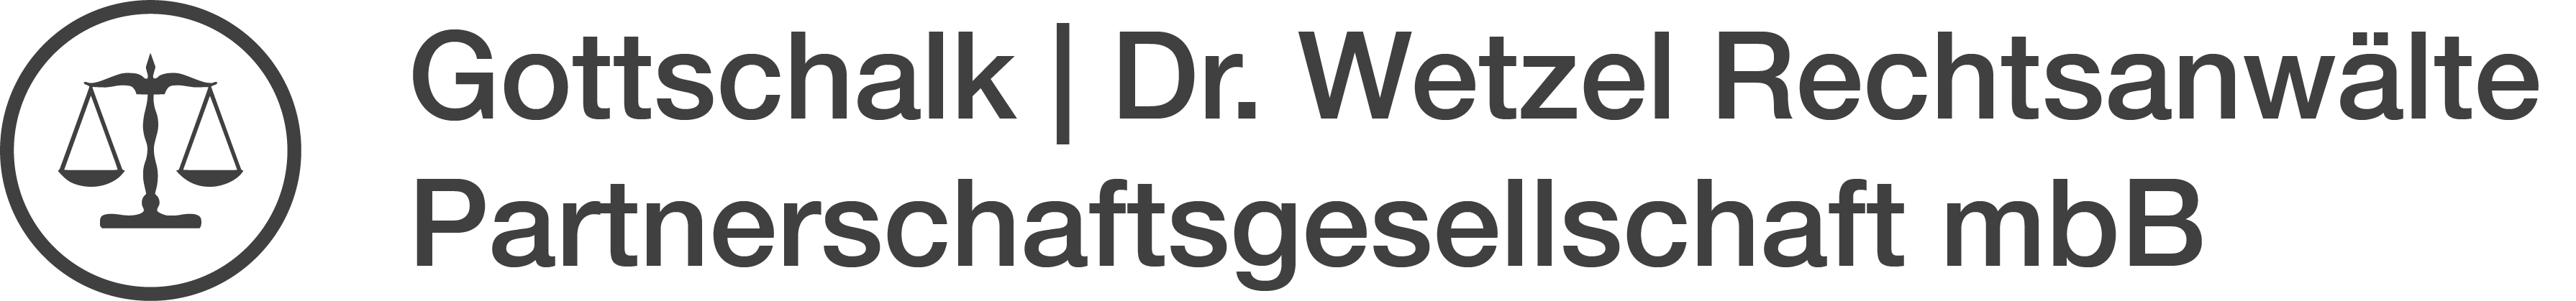 Foto: Gottschalk_DrWetzel_Logo